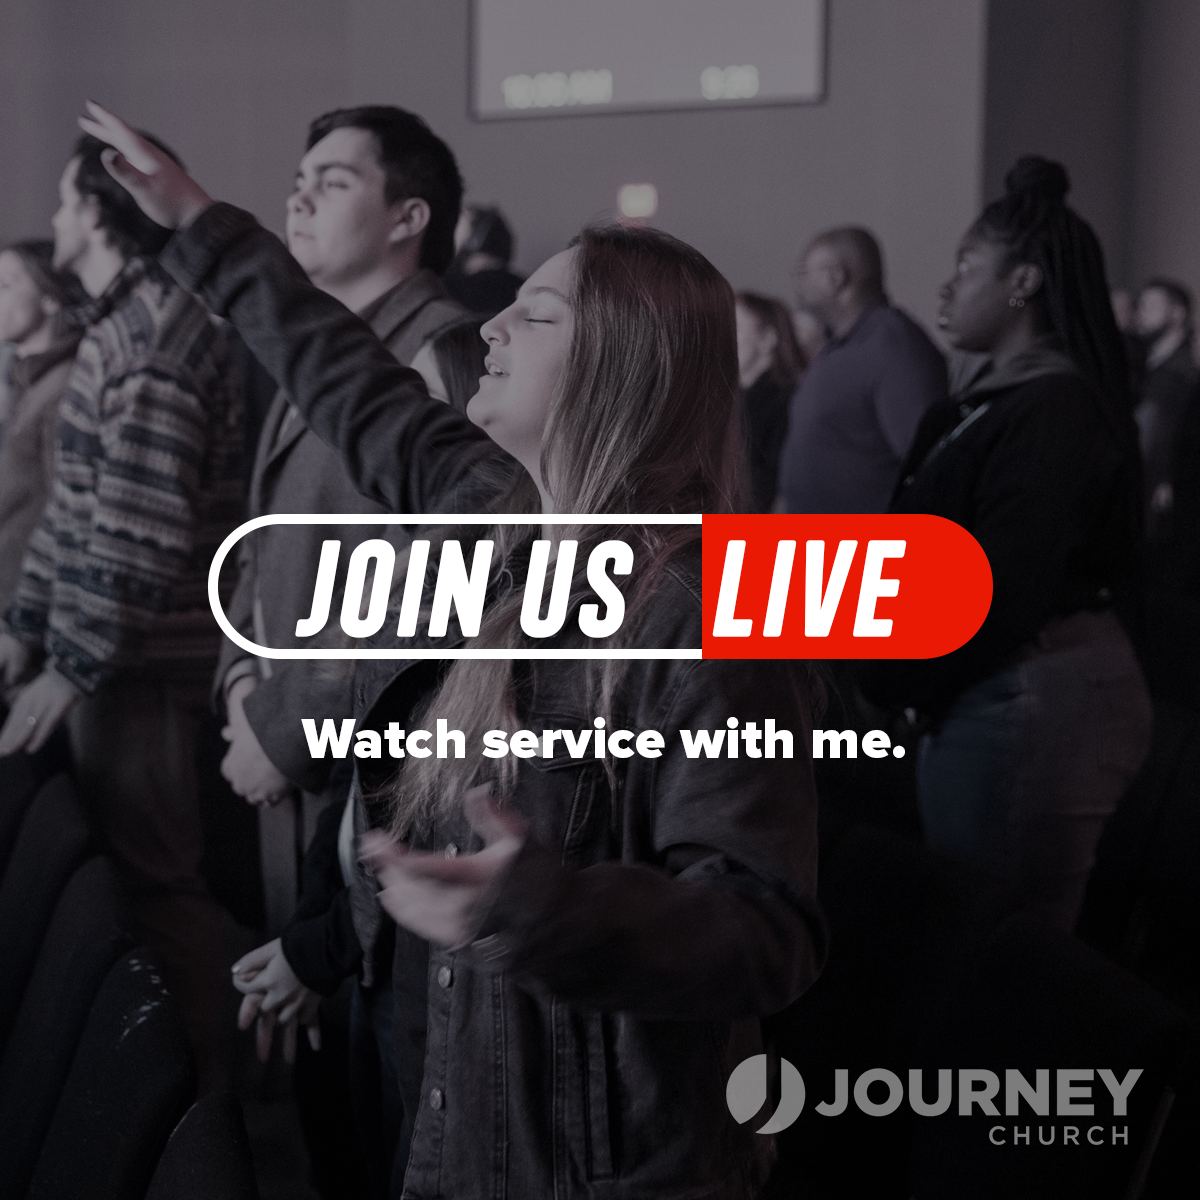 live journey church